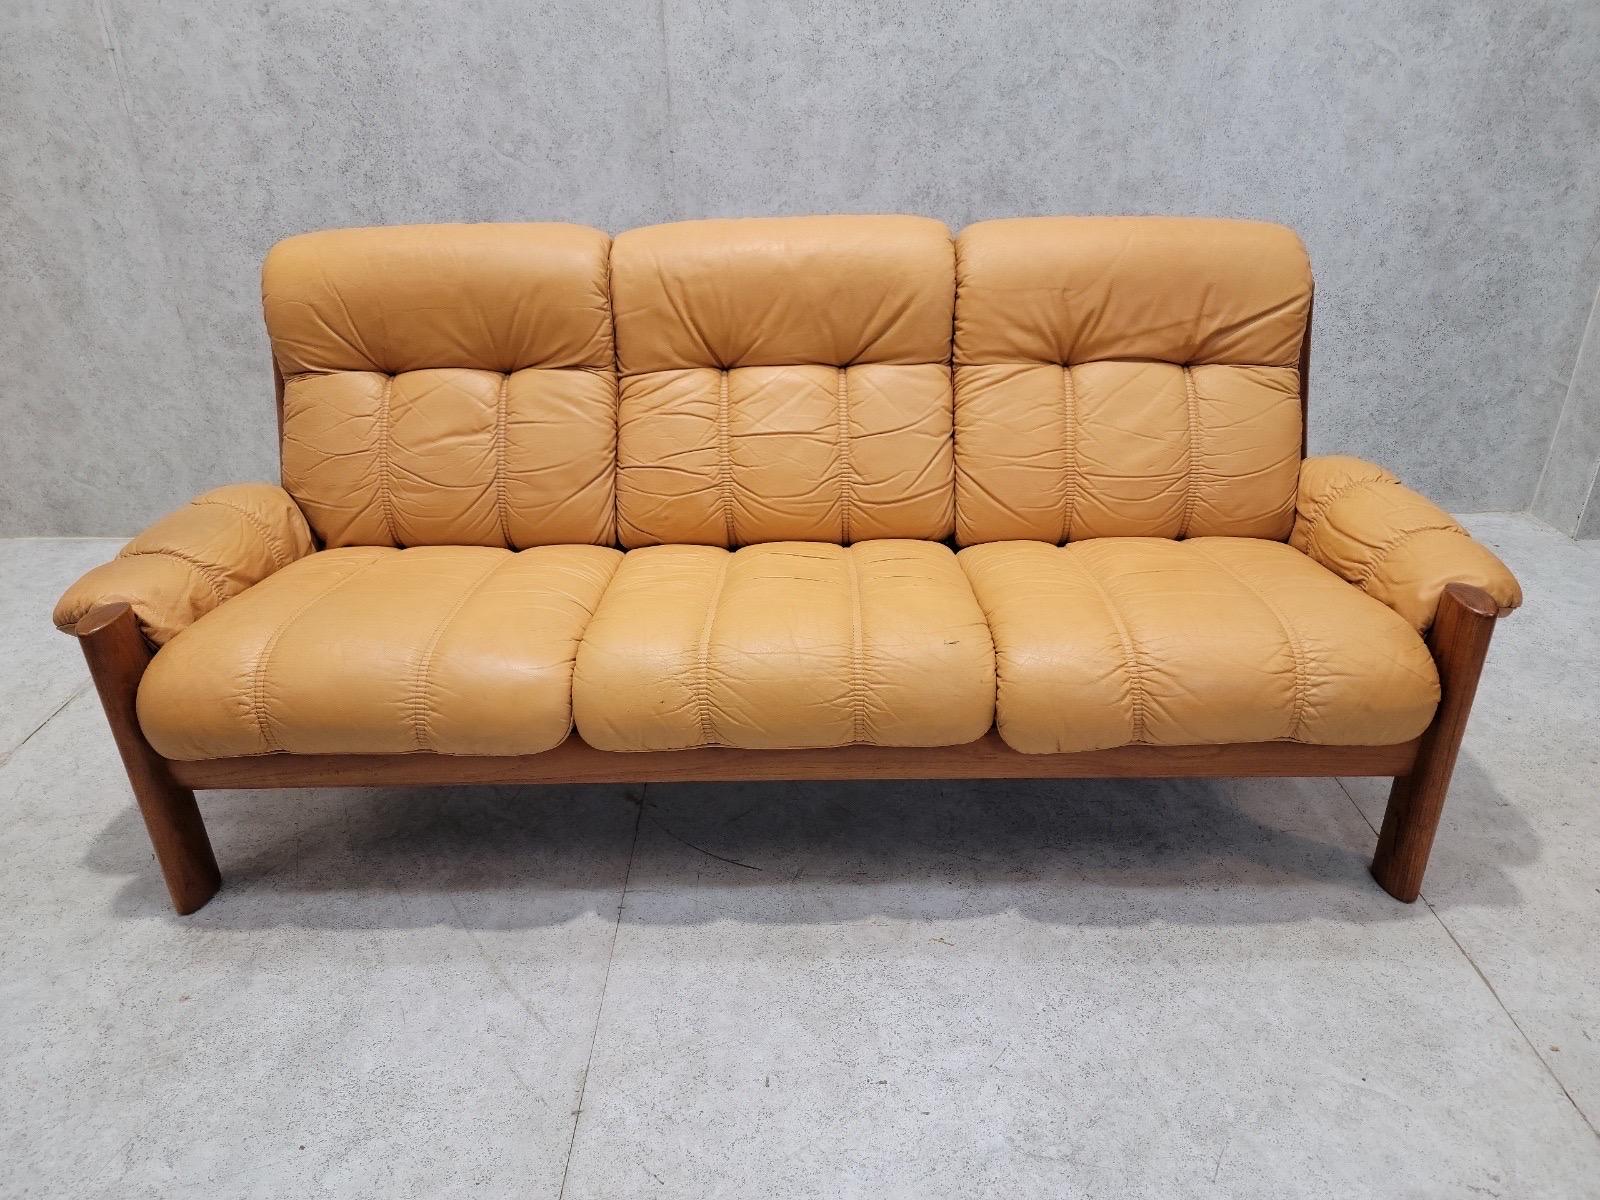 Mid Century Danish Modern Teak & Leather Sofa from Ekornes by Stressless For Sale 1